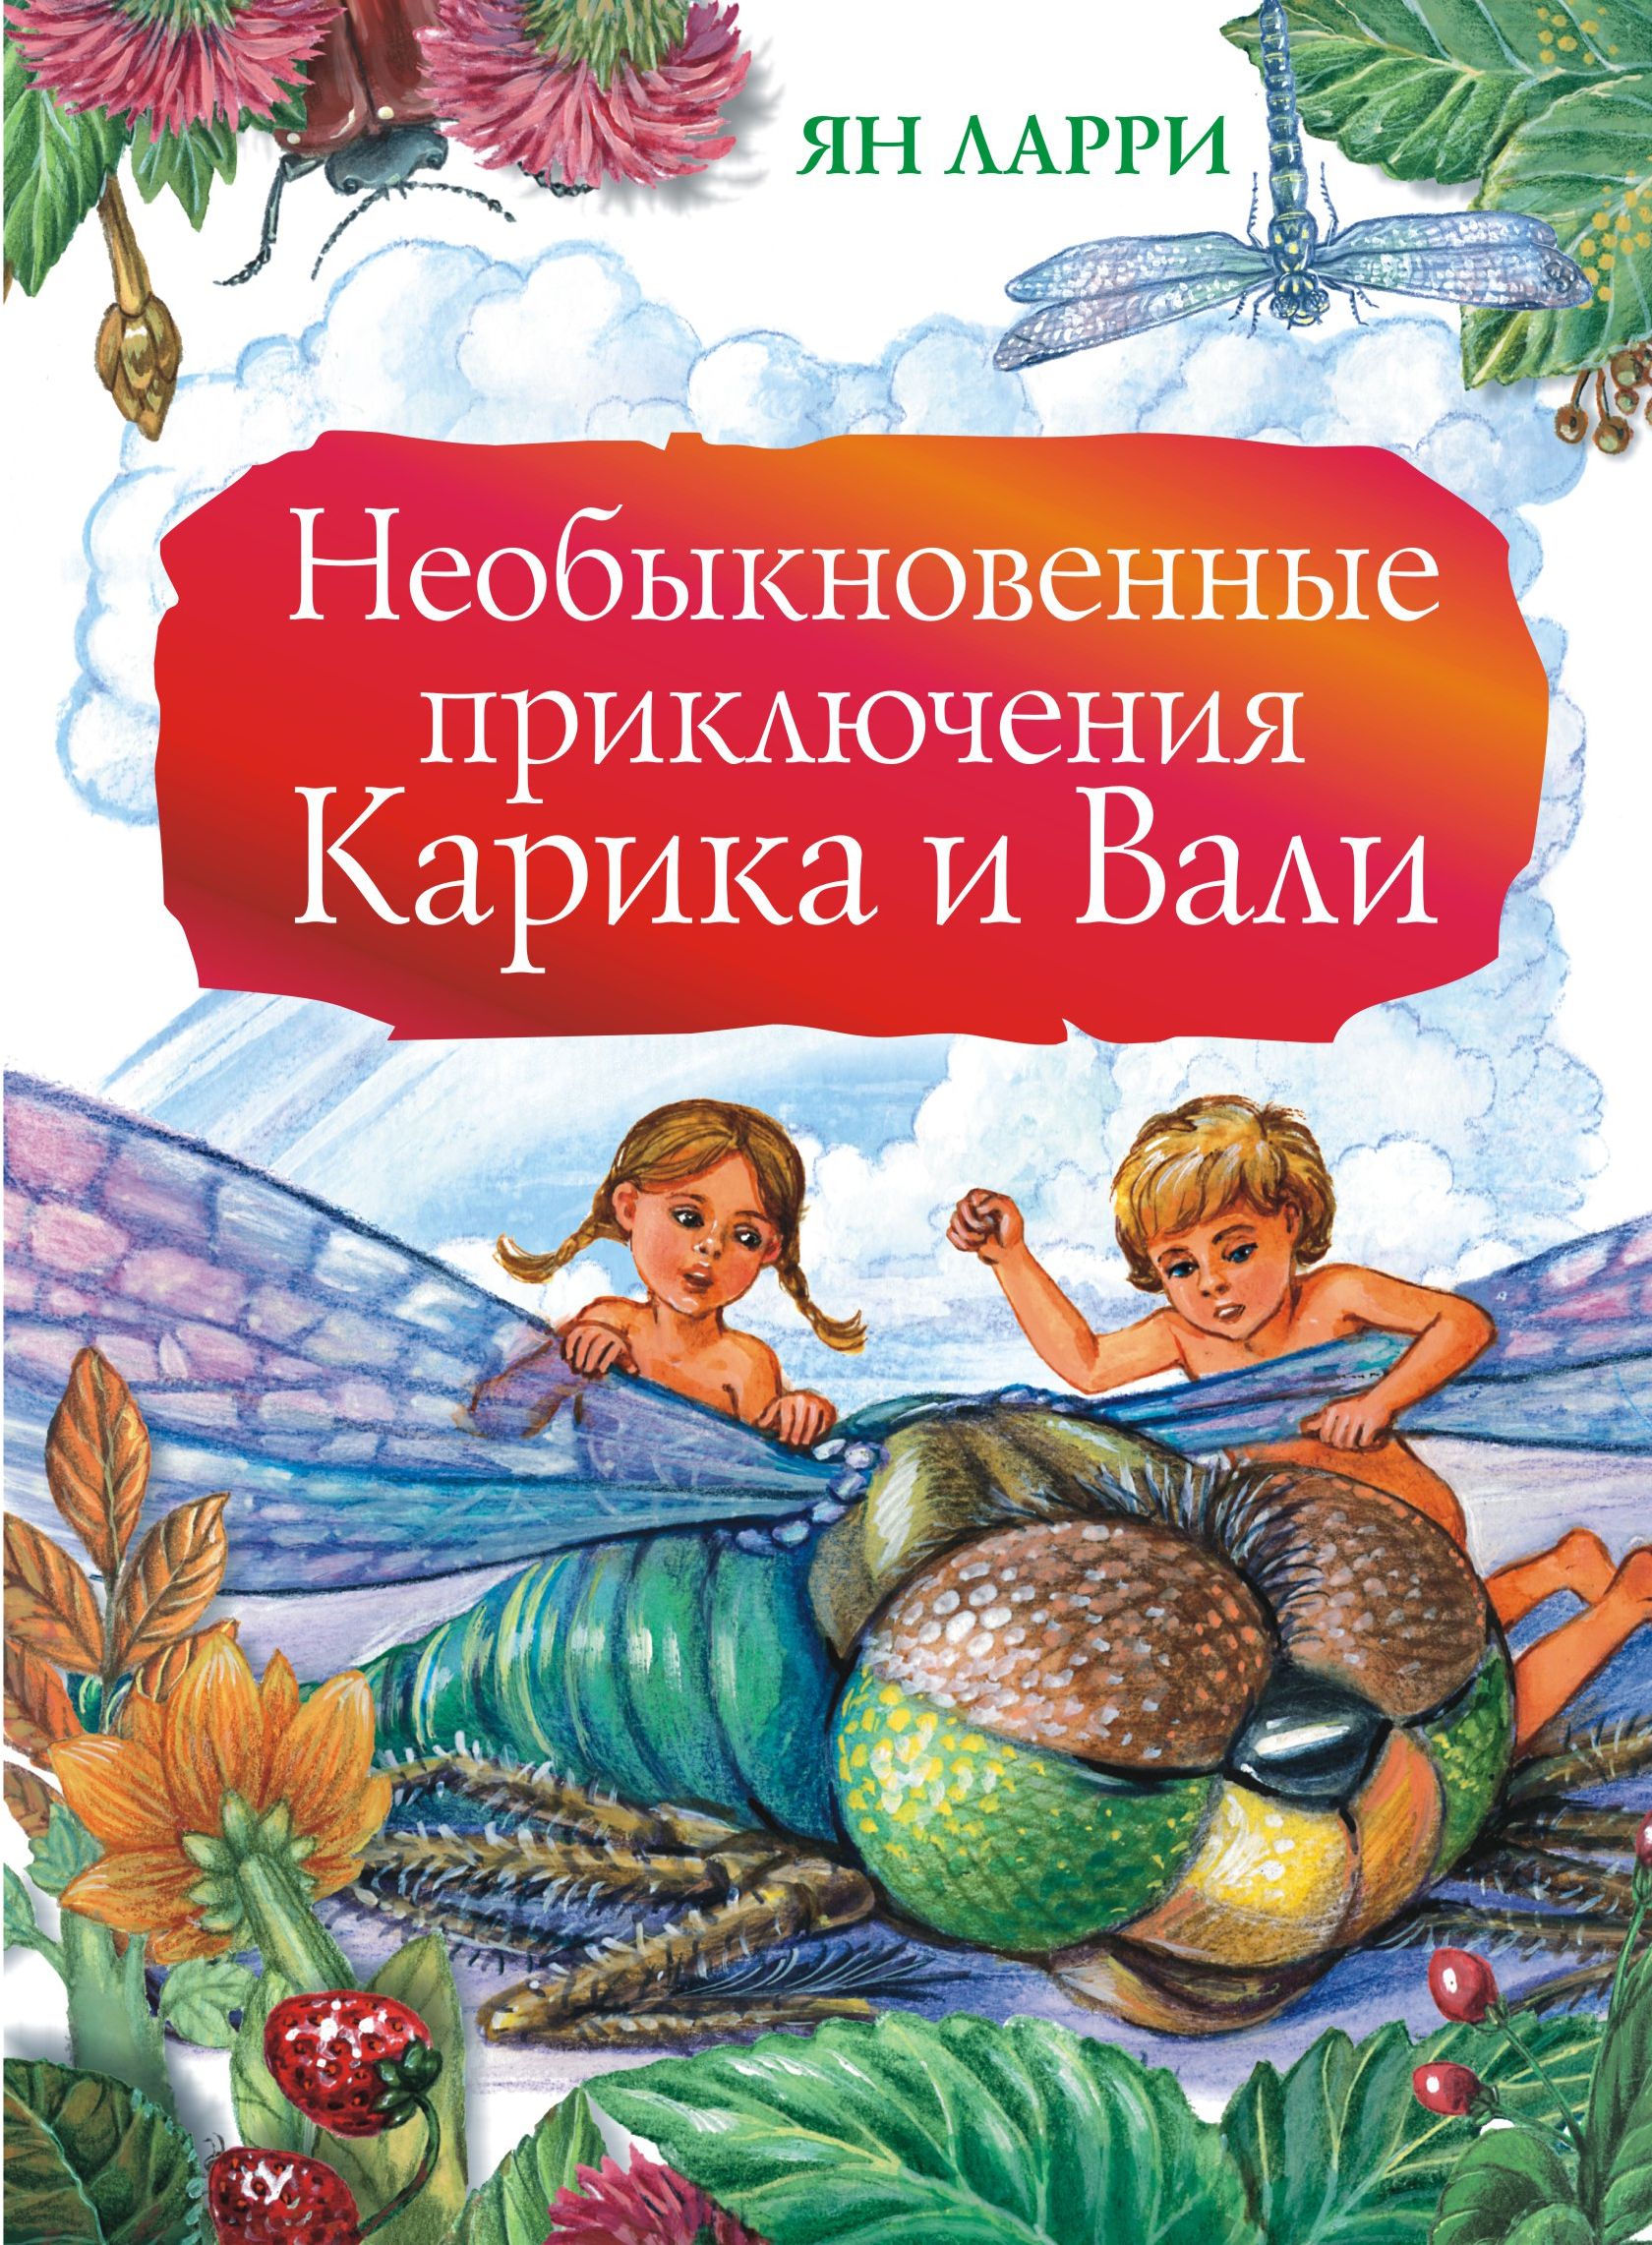 Книга невероятное приключения. Ytj,sryjdtyyst ghbrk.xtybz ufhbrf b DFKB ZY kfhhb. Детская книга приключения Карика и Вали.